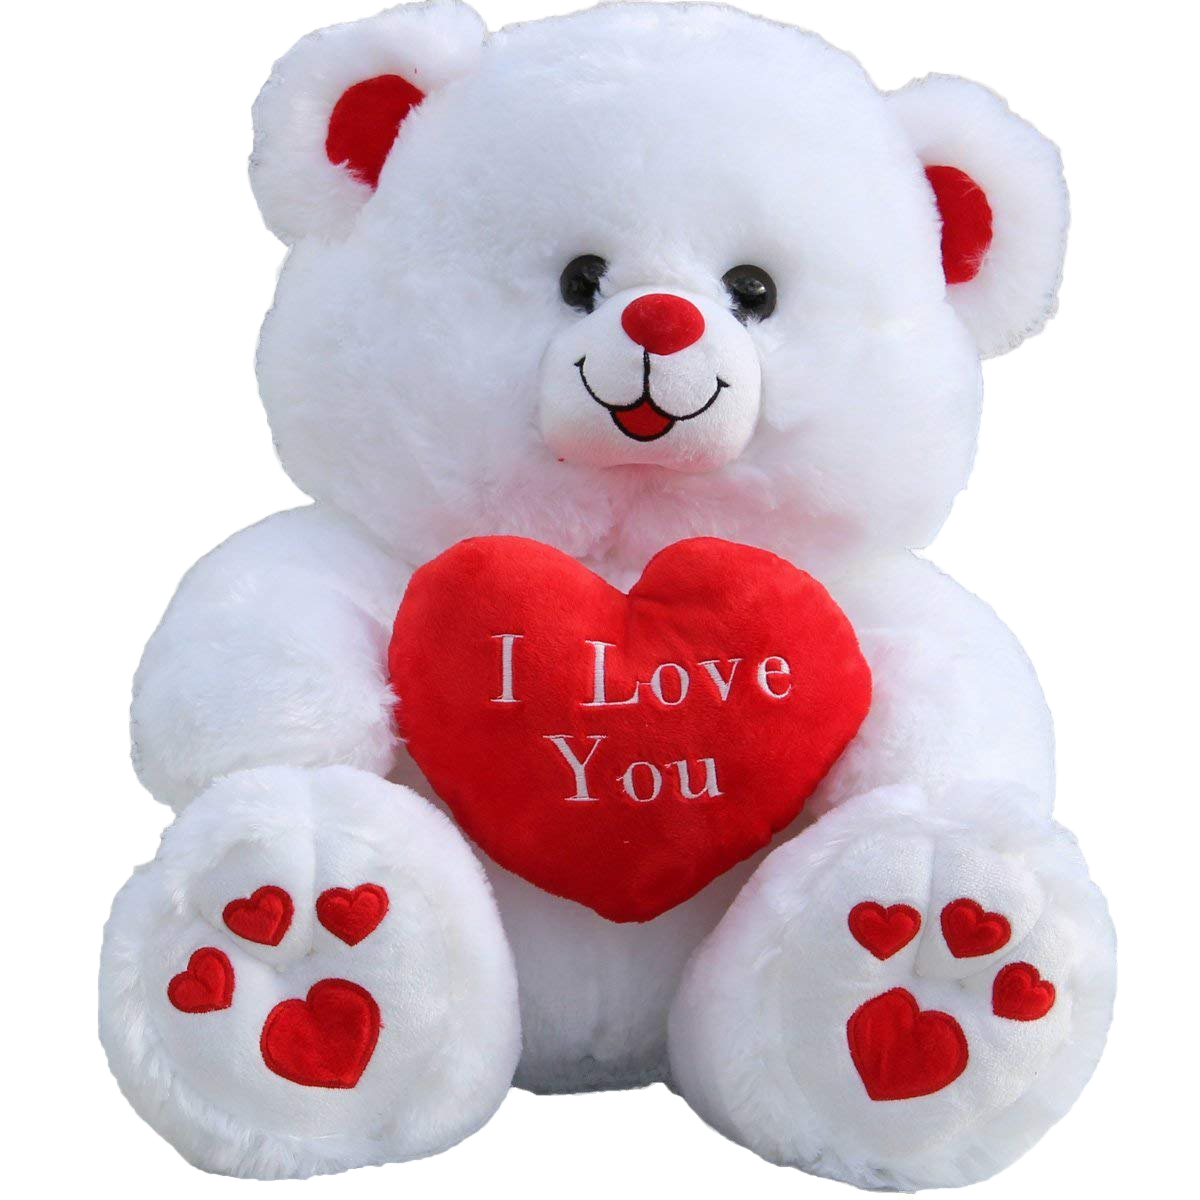 love teddy bear images hd